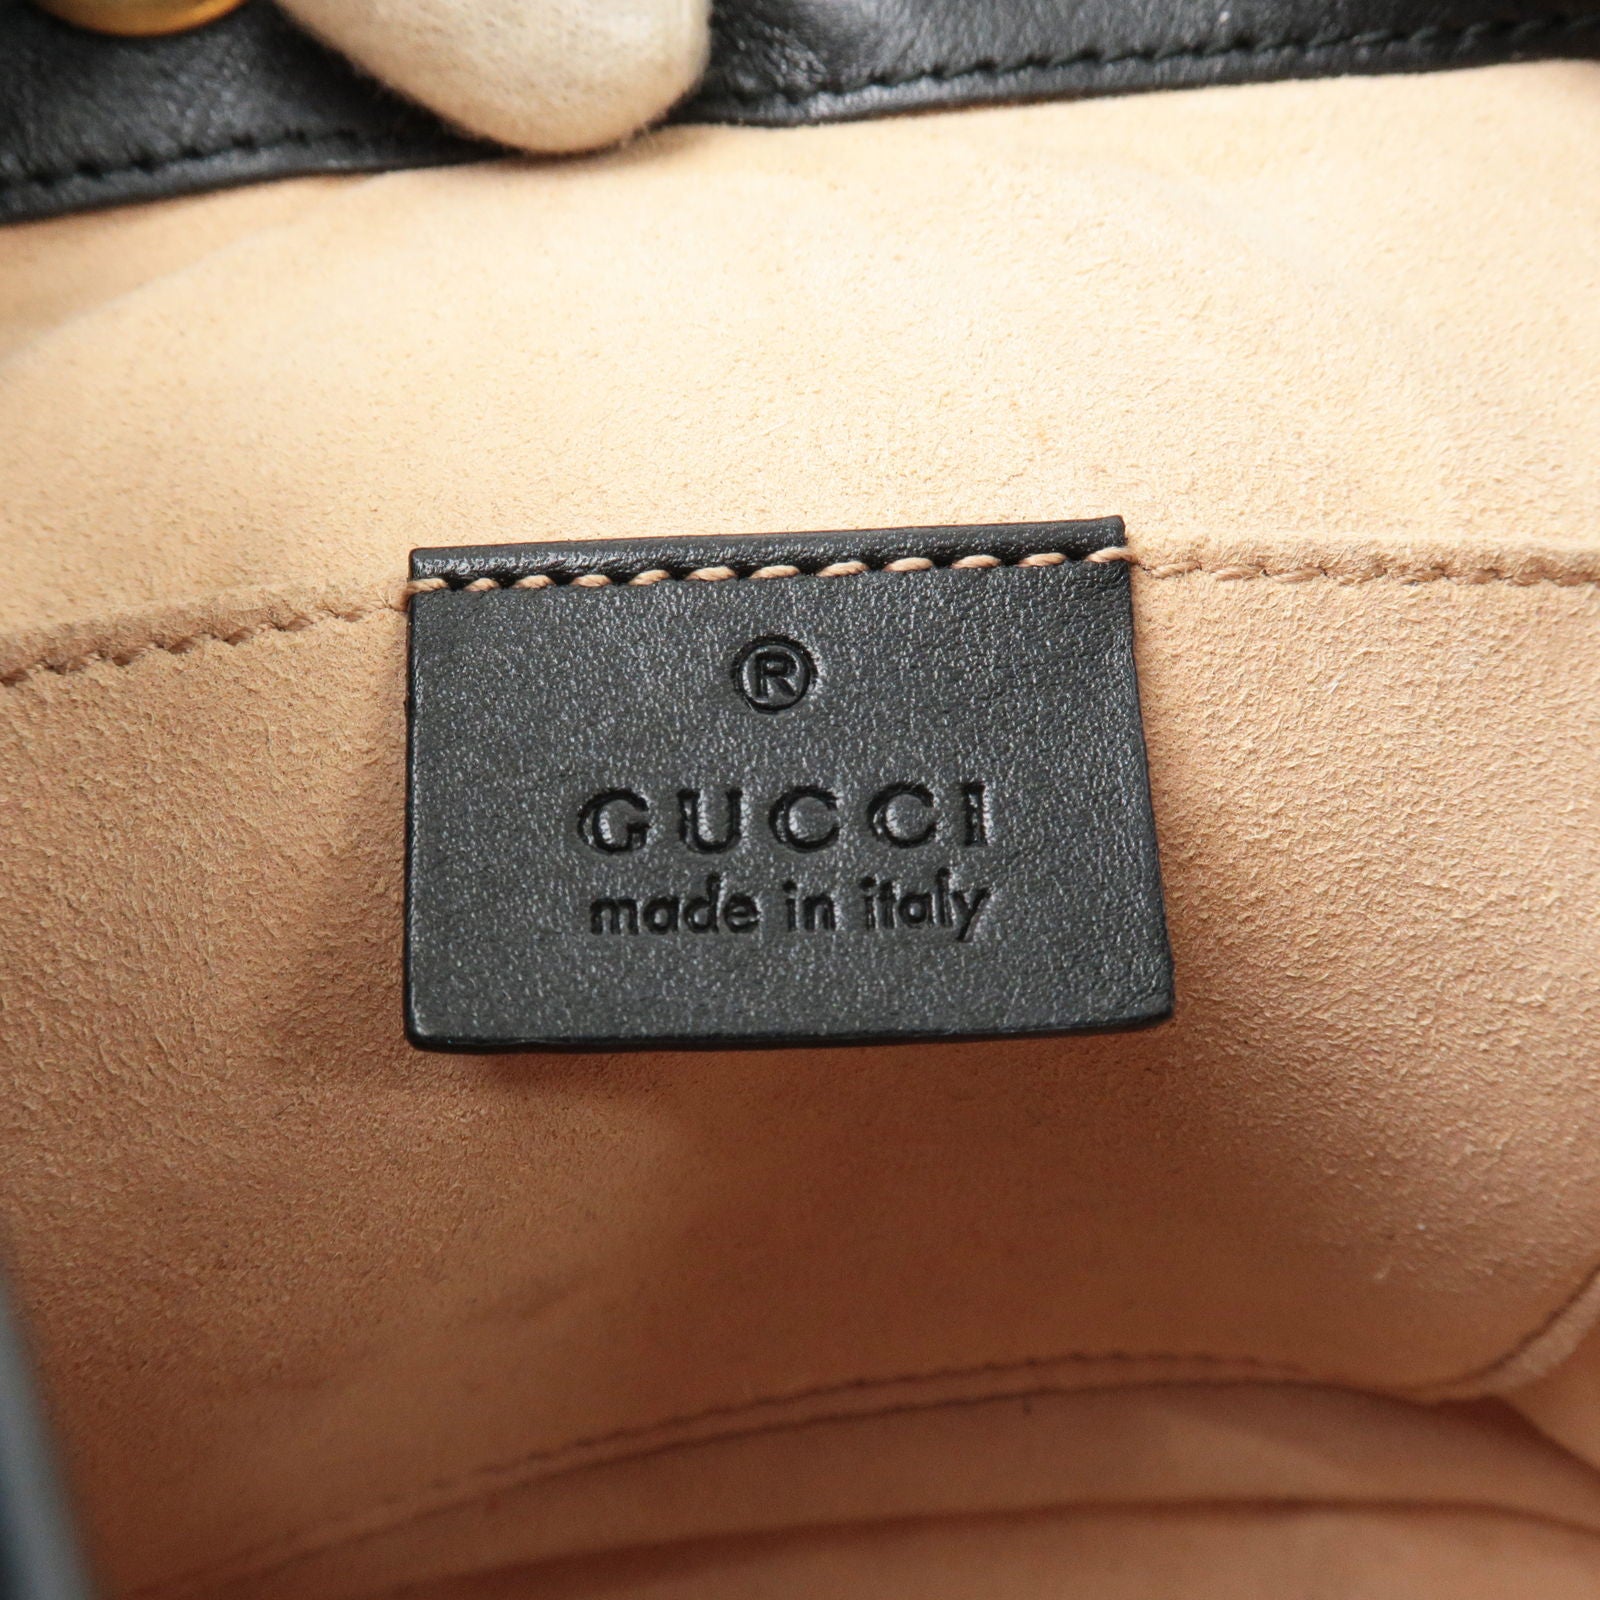 GUCCI - 528129 – Sac bandoulière Gucci GG Marmont en cuir matelassé nude -  Gucci Double G leather wallet keyring - Leather - Ruck - Pack - Sack - Back  - GG - Marmont - Black